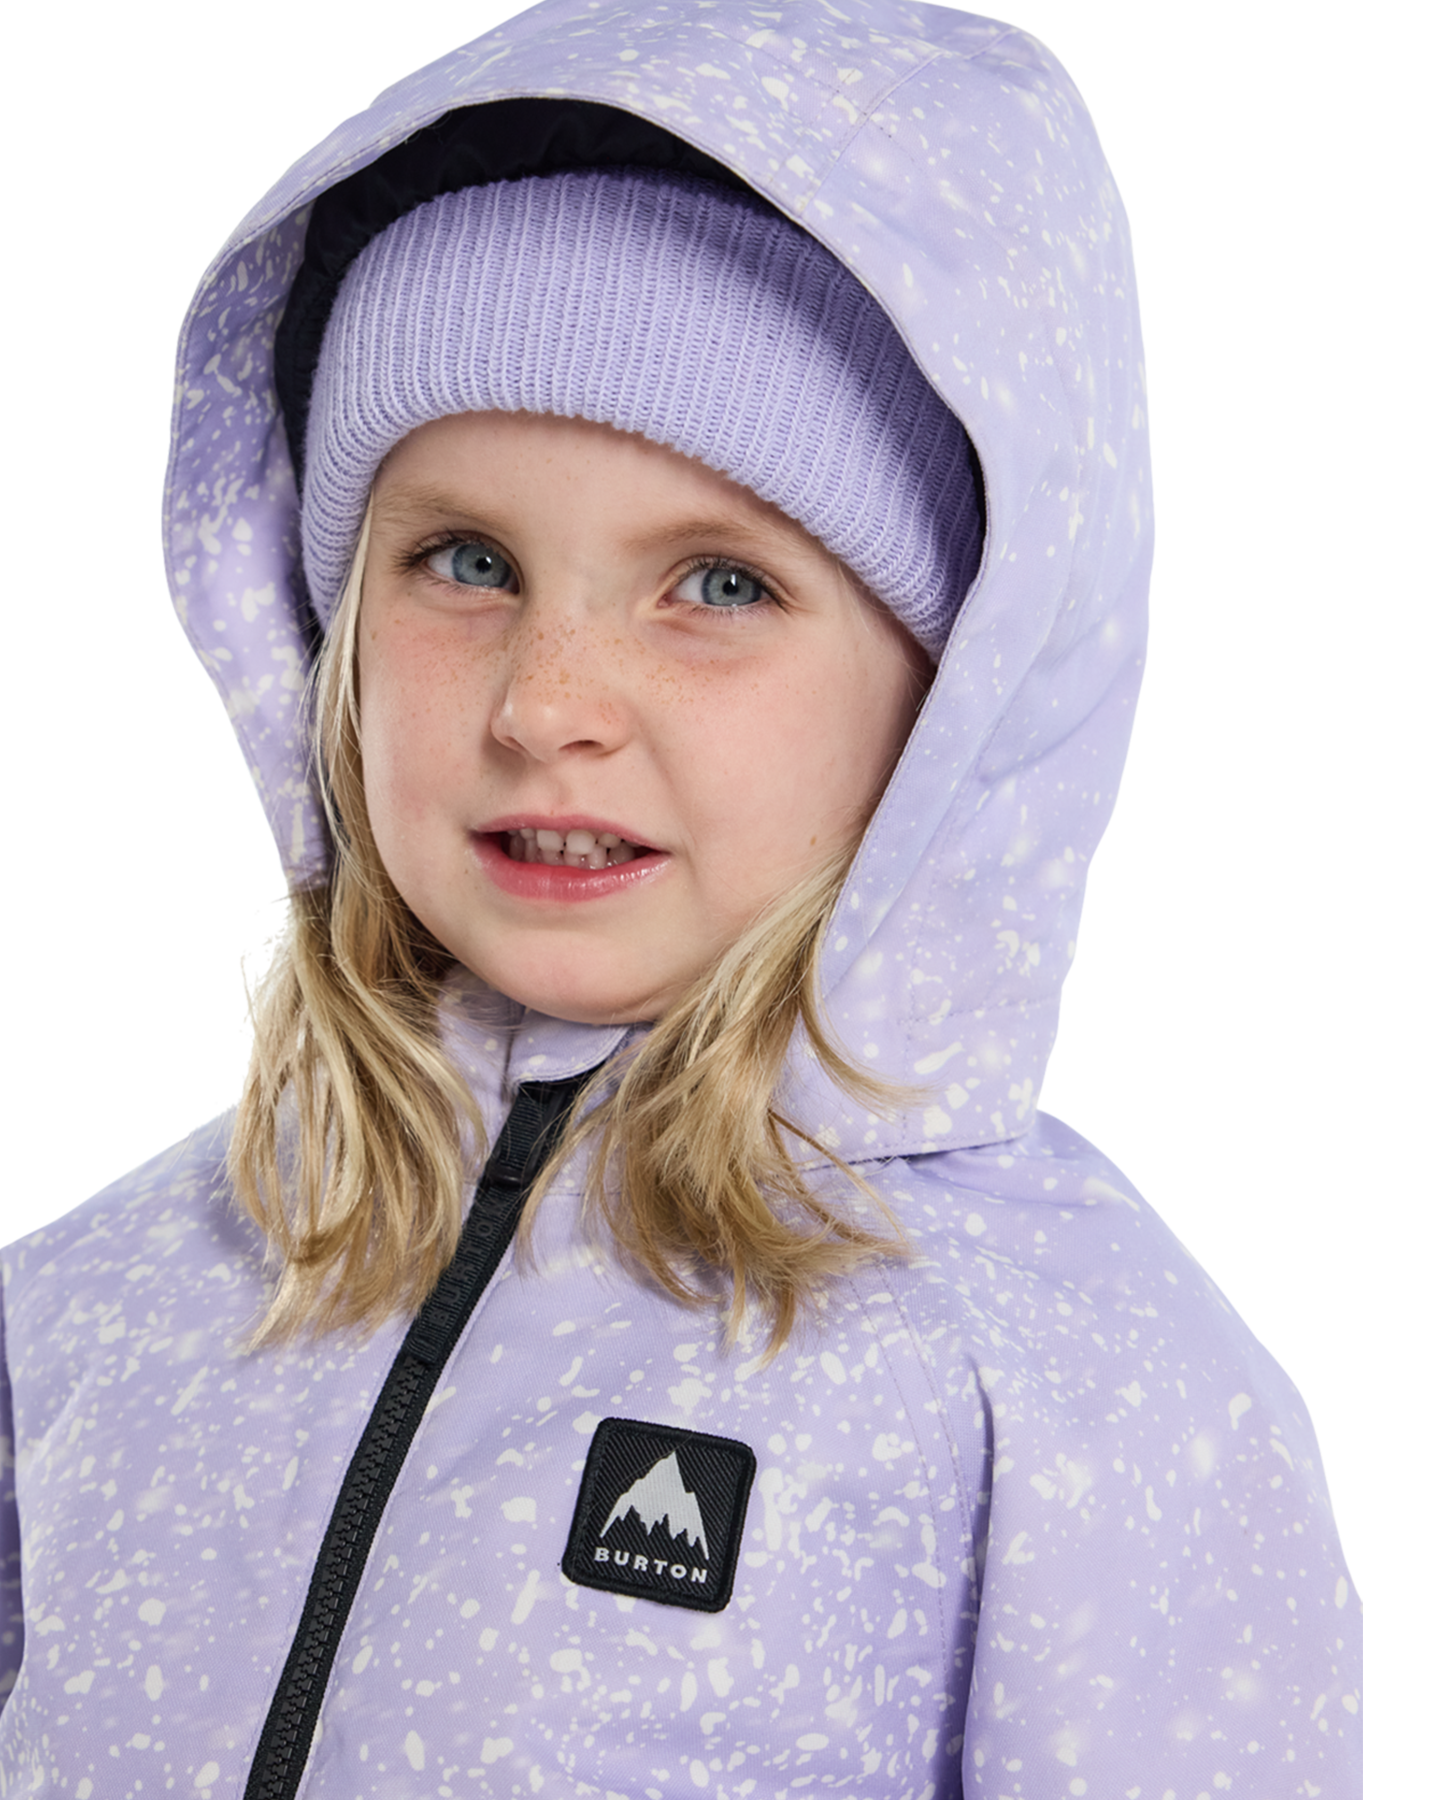 Burton Toddlers' 2L Bomber Snow Jacket - Stardust Kids' Snow Jackets - Trojan Wake Ski Snow